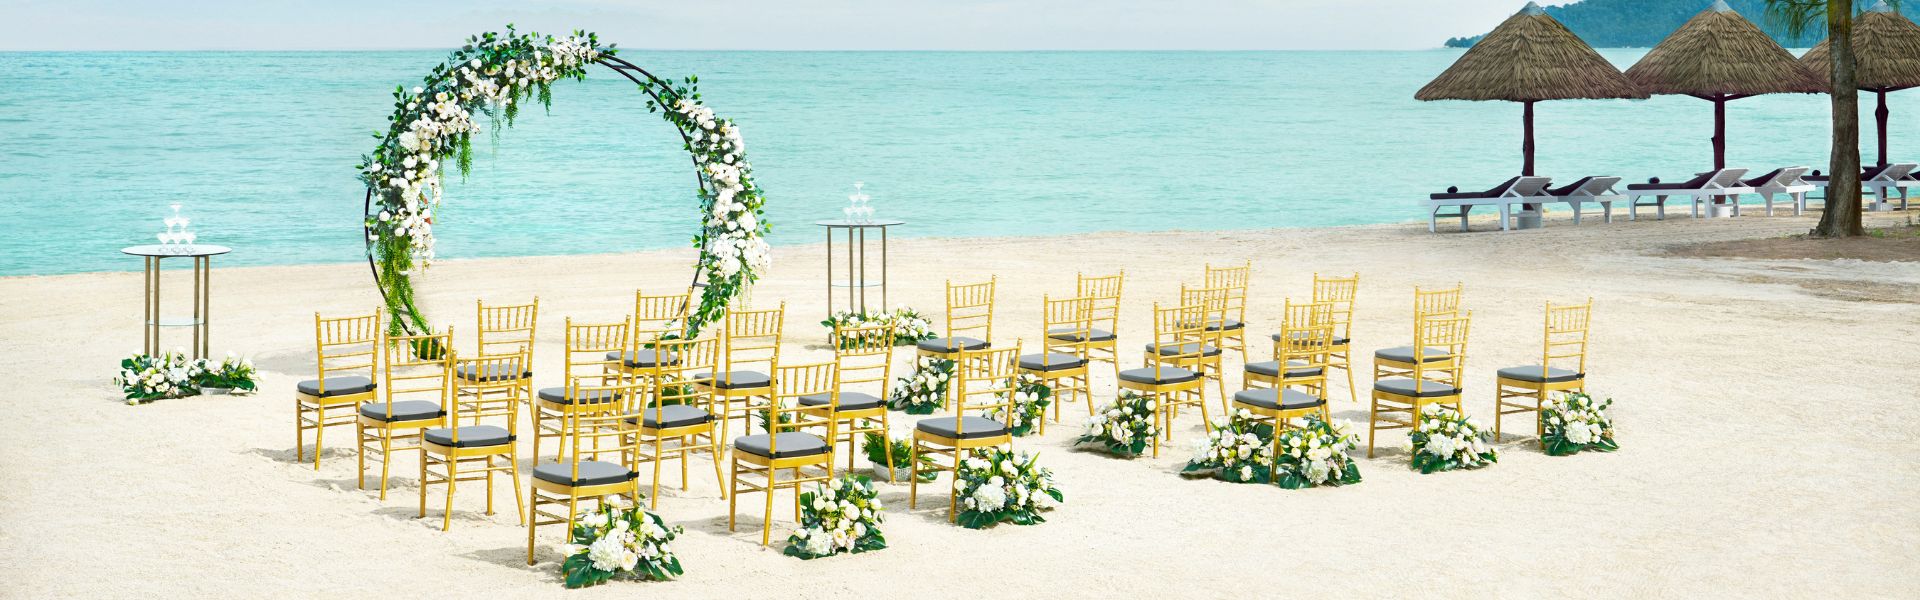 beach wedding at doubletree by hilton damai laut